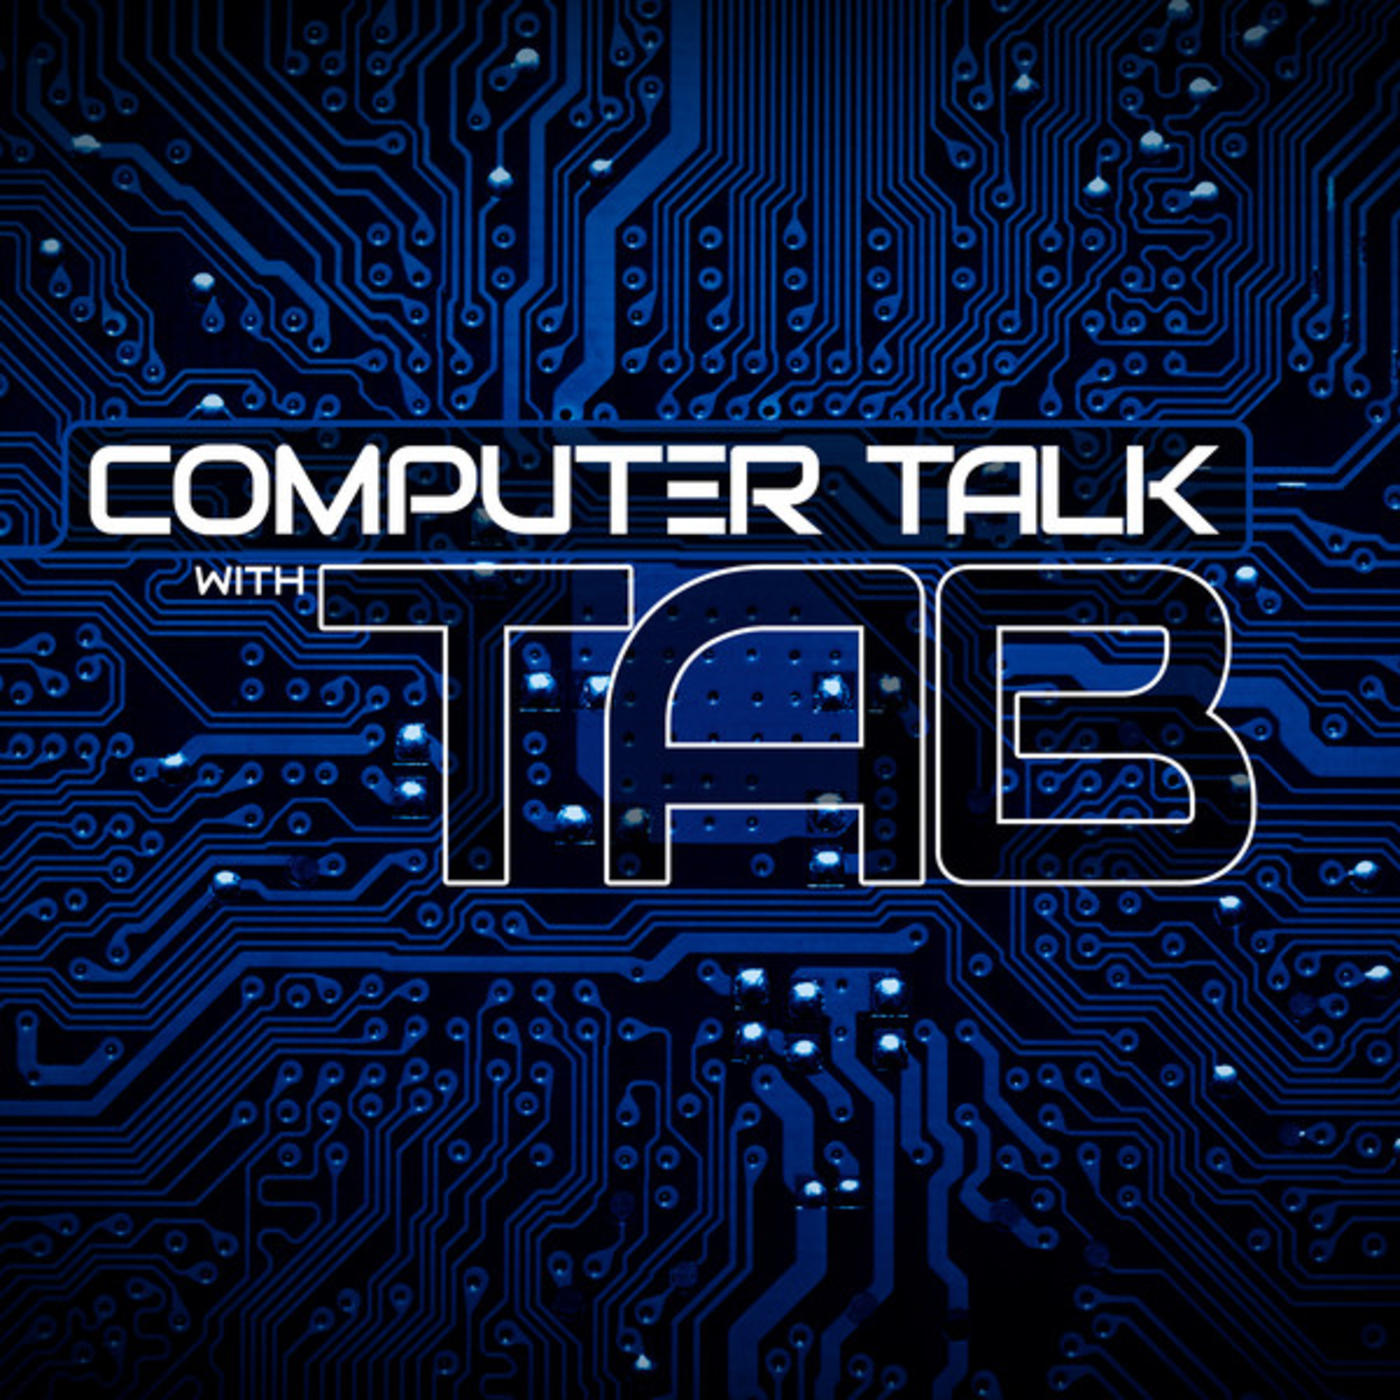 Computer Talk: The Annual Camera Show (11/17/18) - Part 2